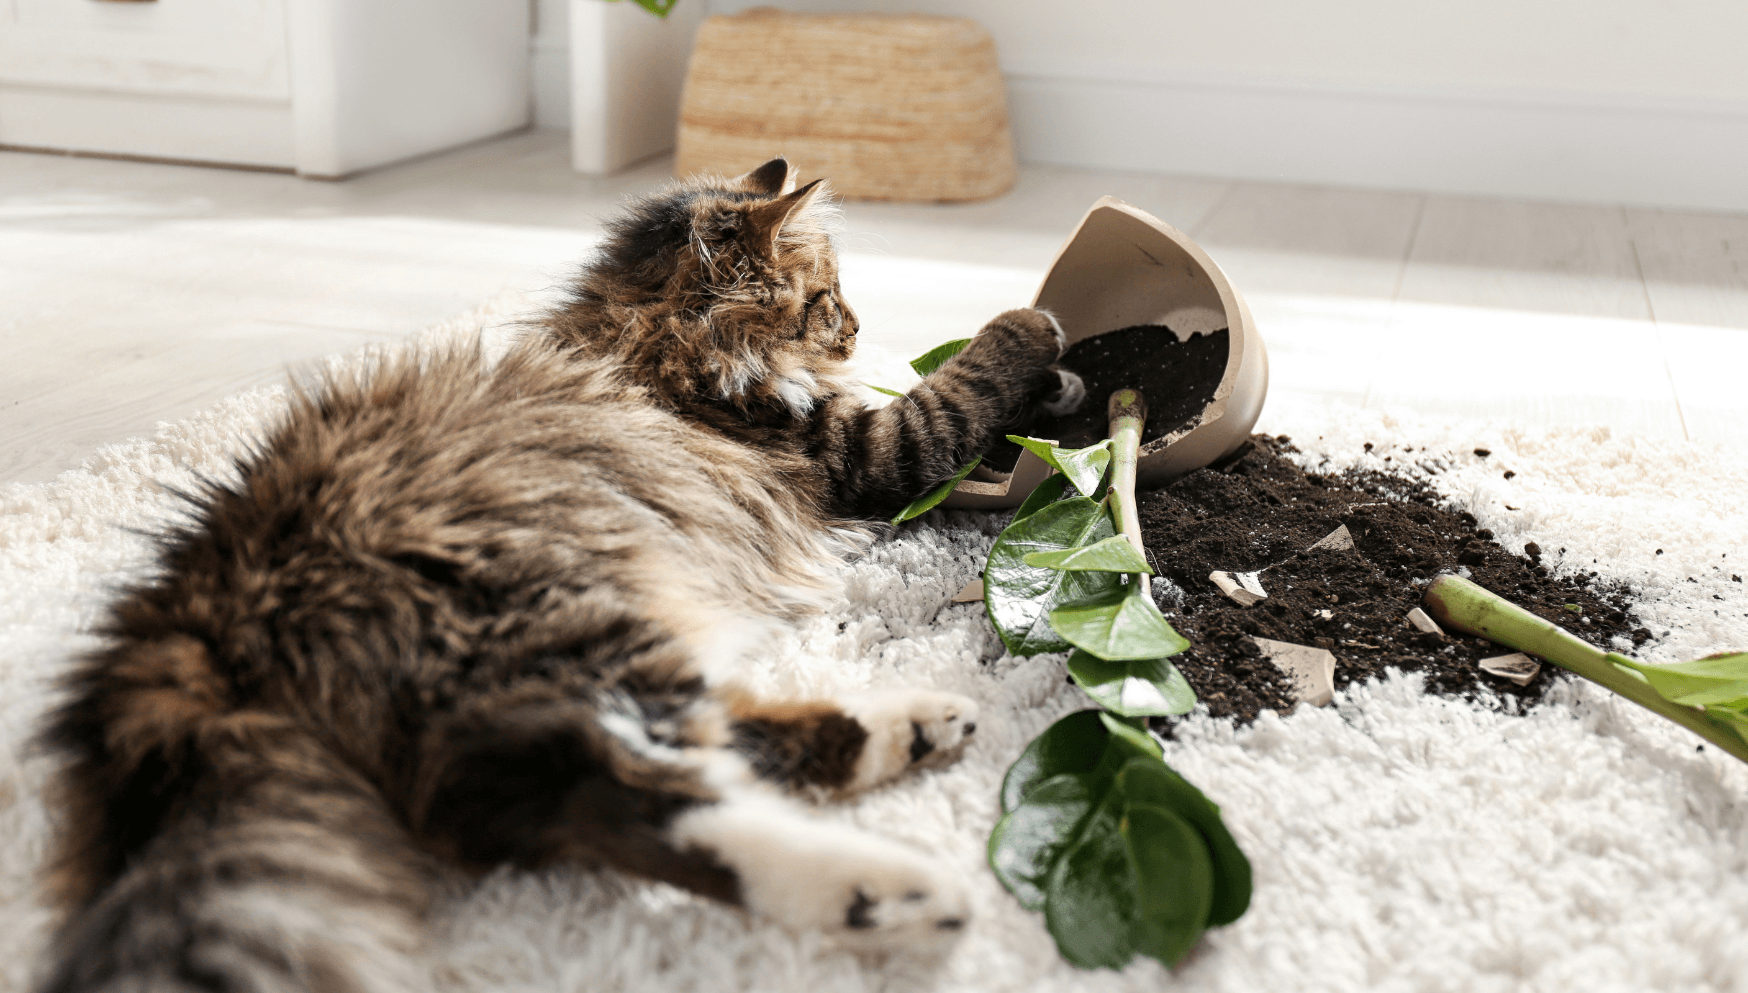 Cat with broken plant pot.png